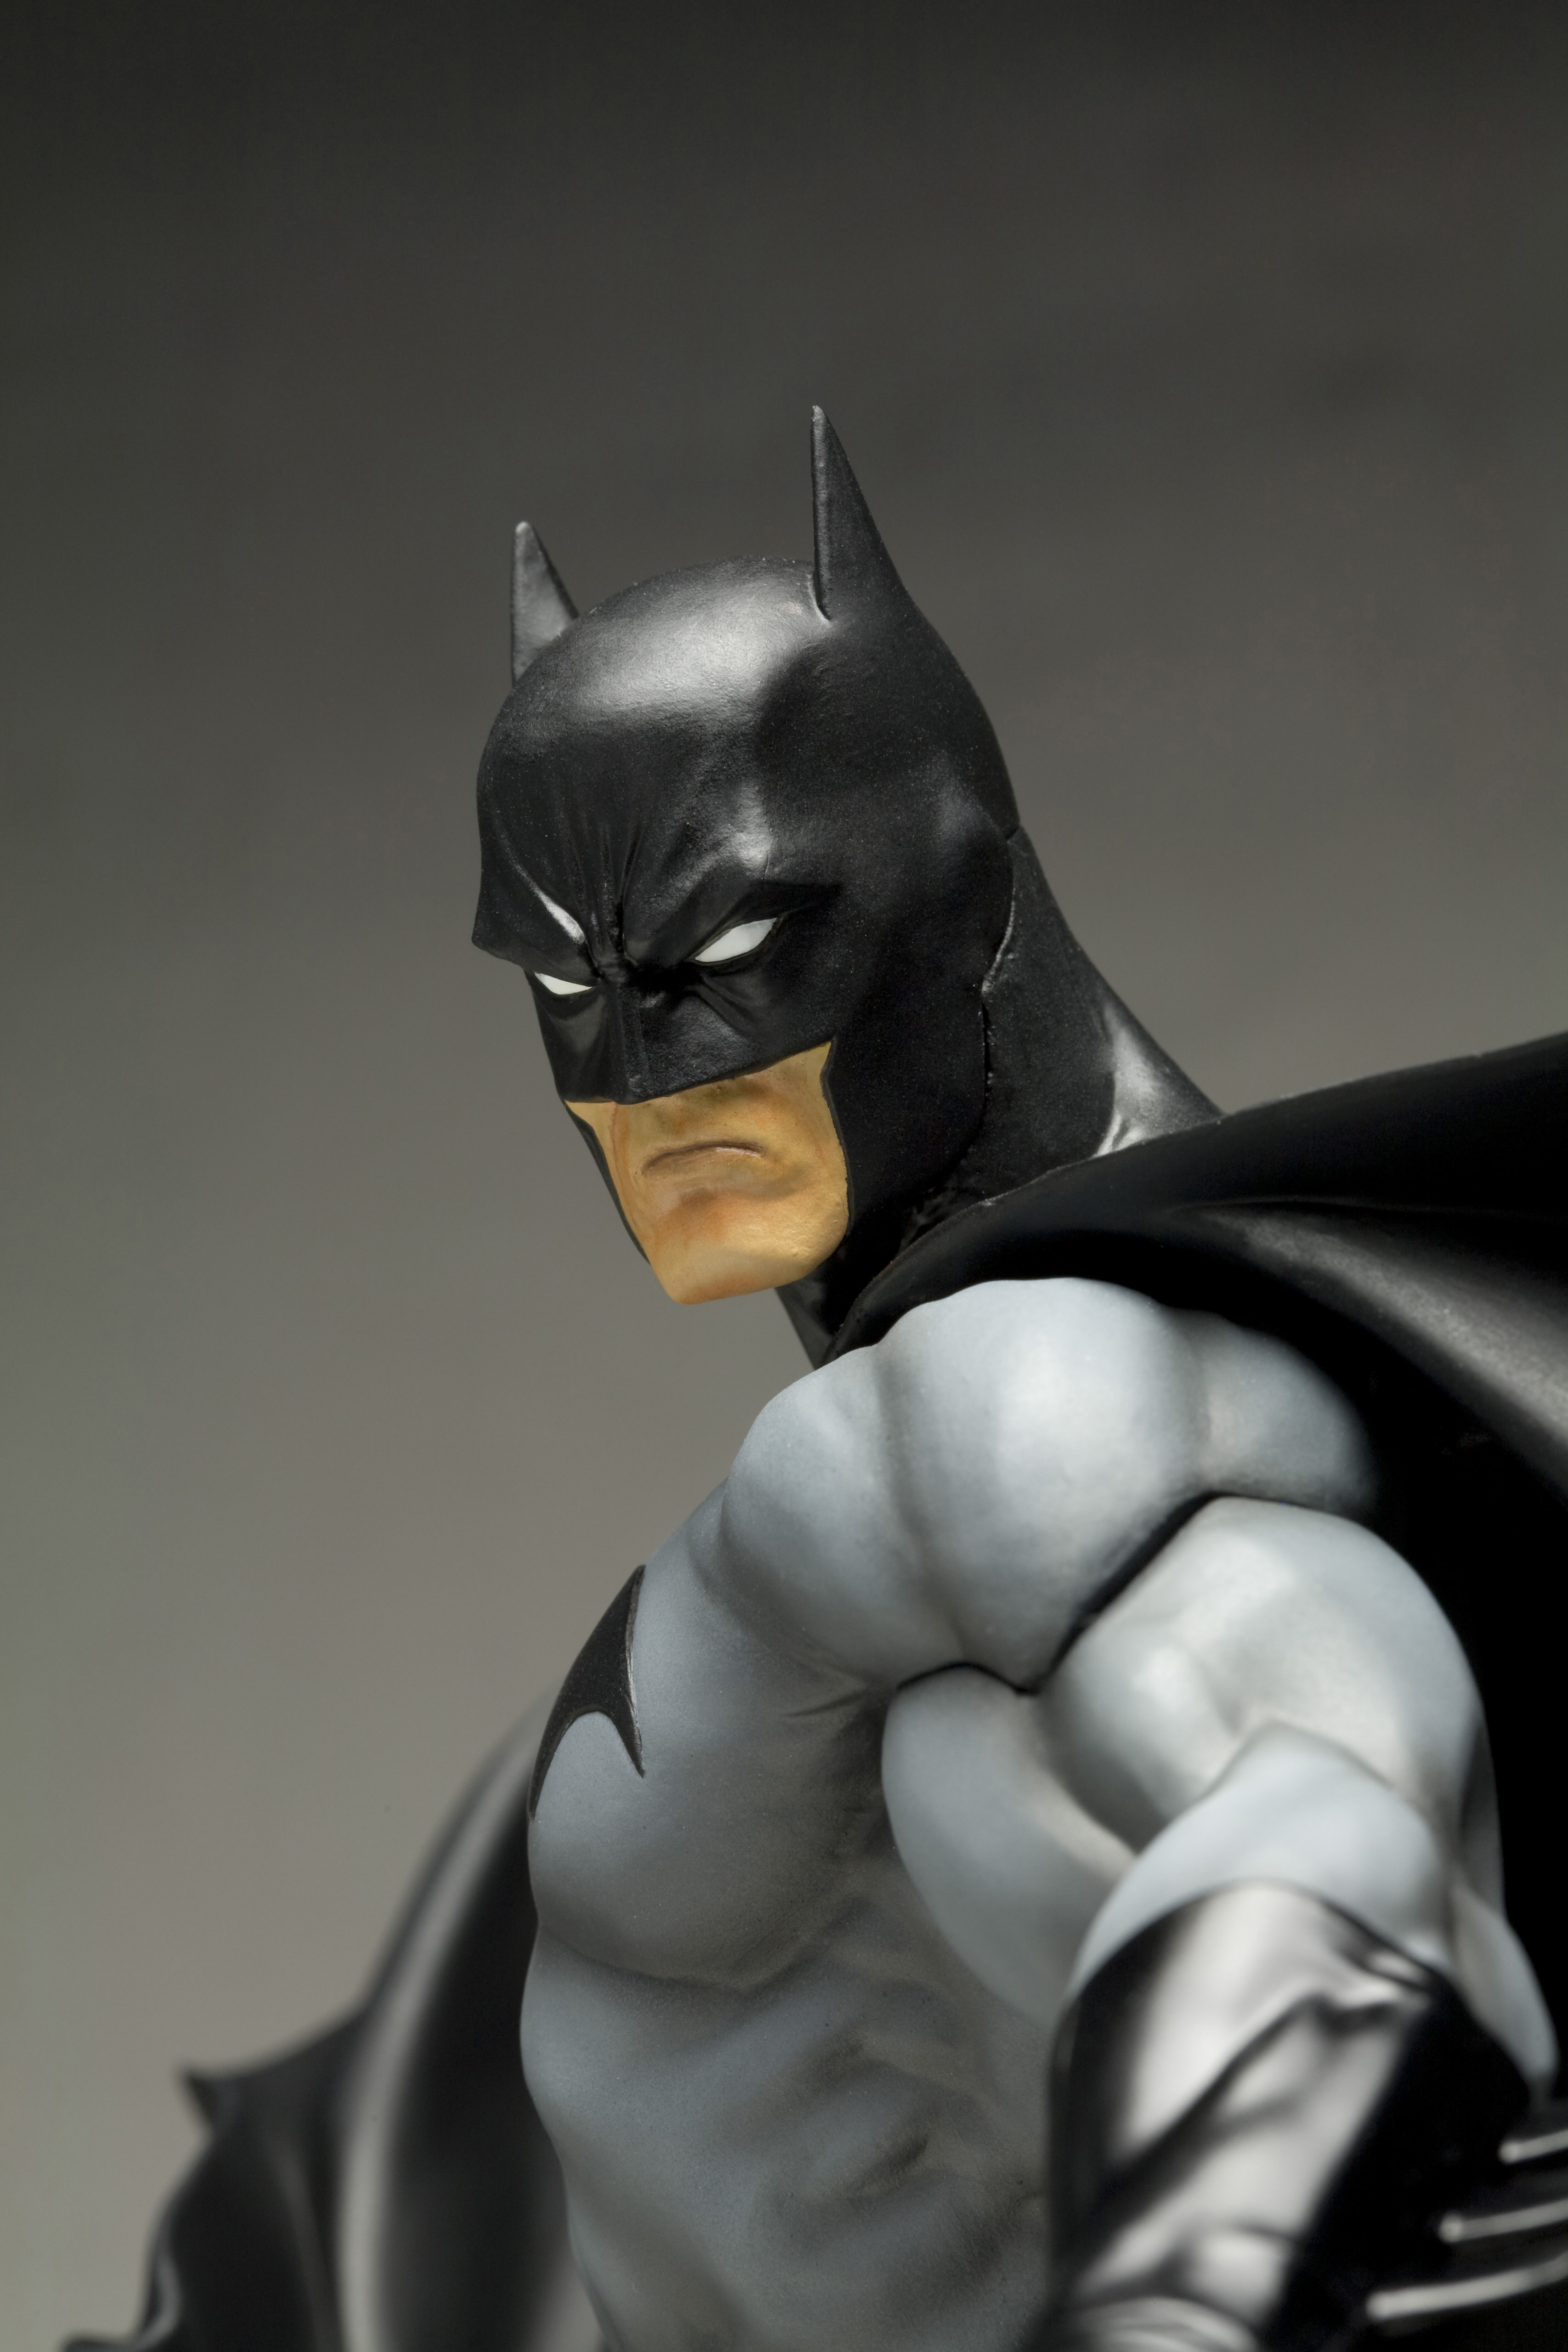 Batman black. Черный Бэтмен. Бэтмен имя героя. Batman Black Costume. Бэтмен имя персонажа.